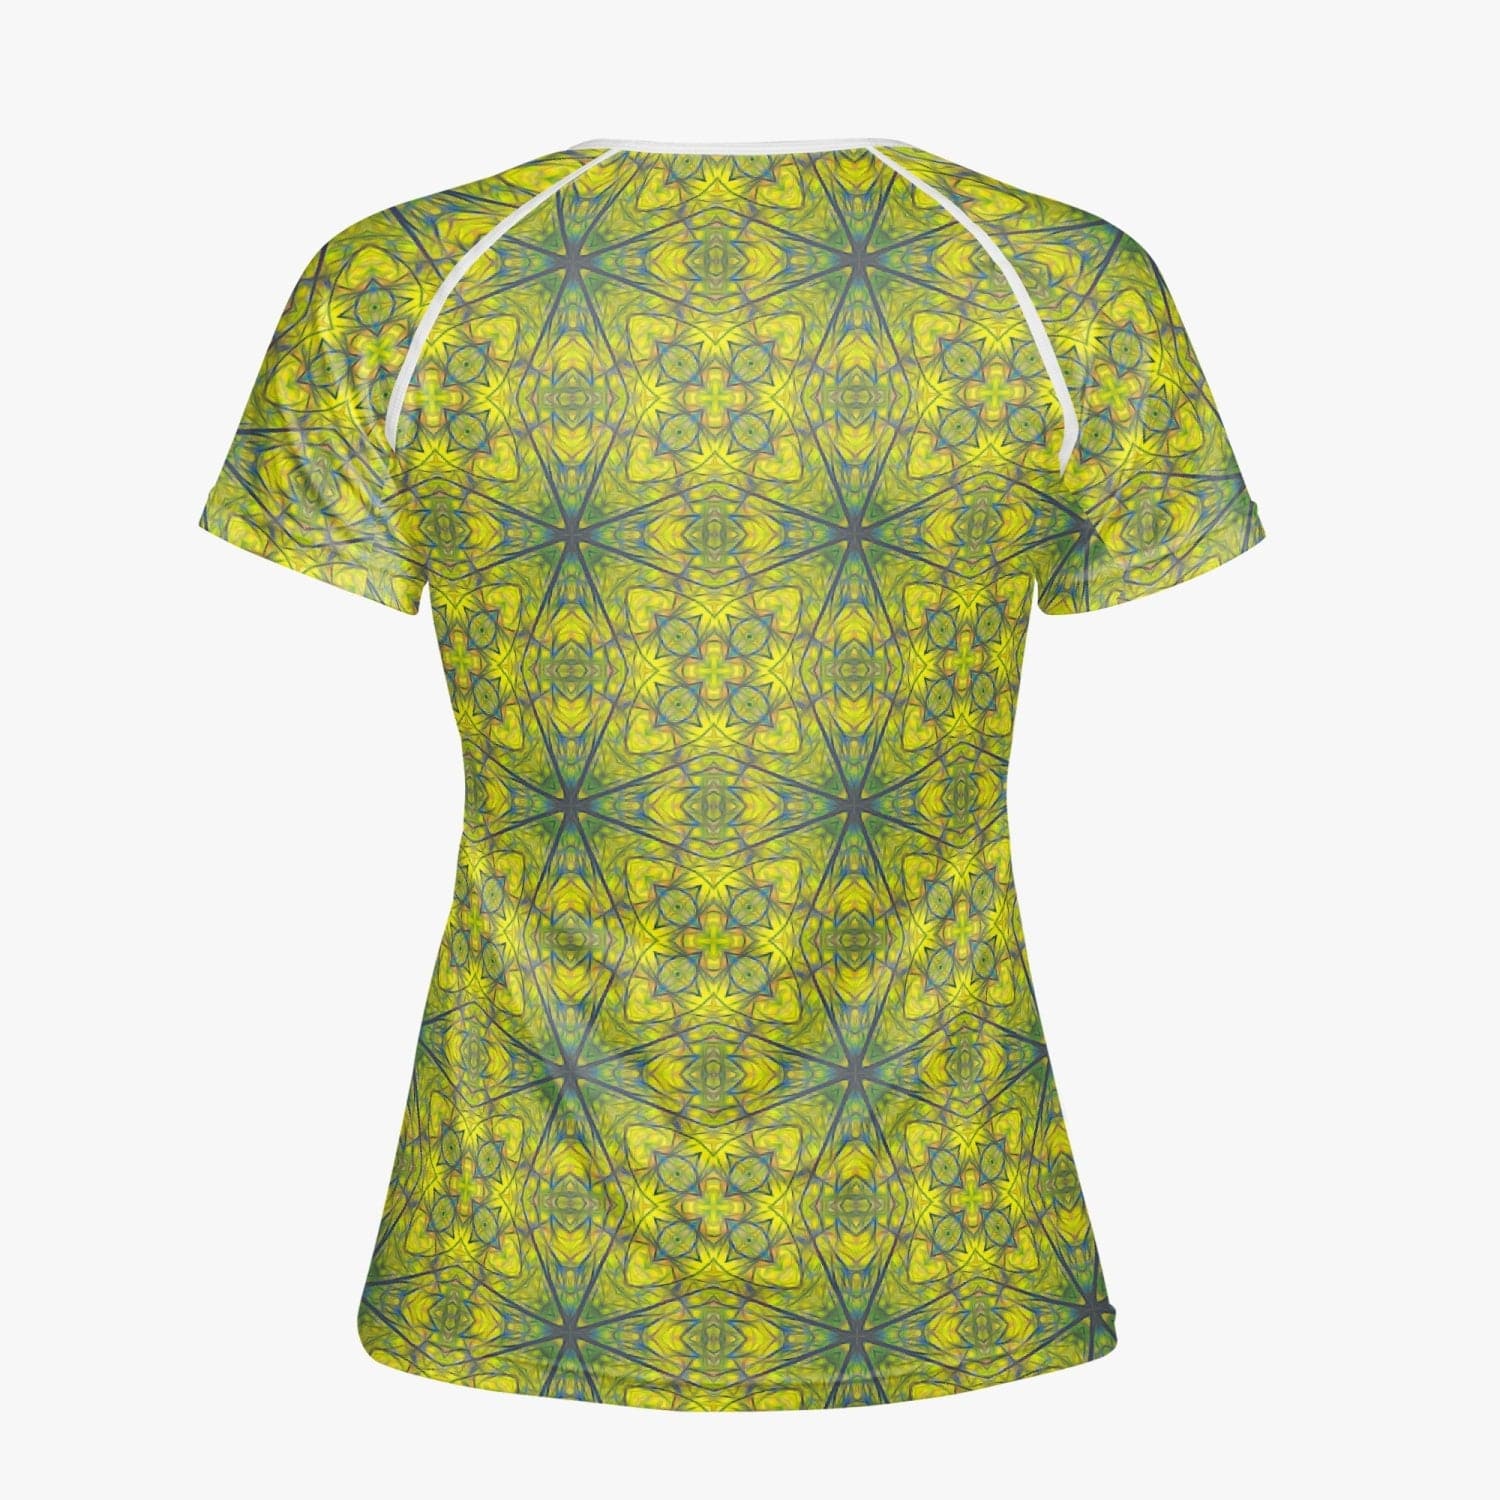 Green Hart chacra Handmade Yoga Top for Women sports T-shirt, by Sensus Studio Design